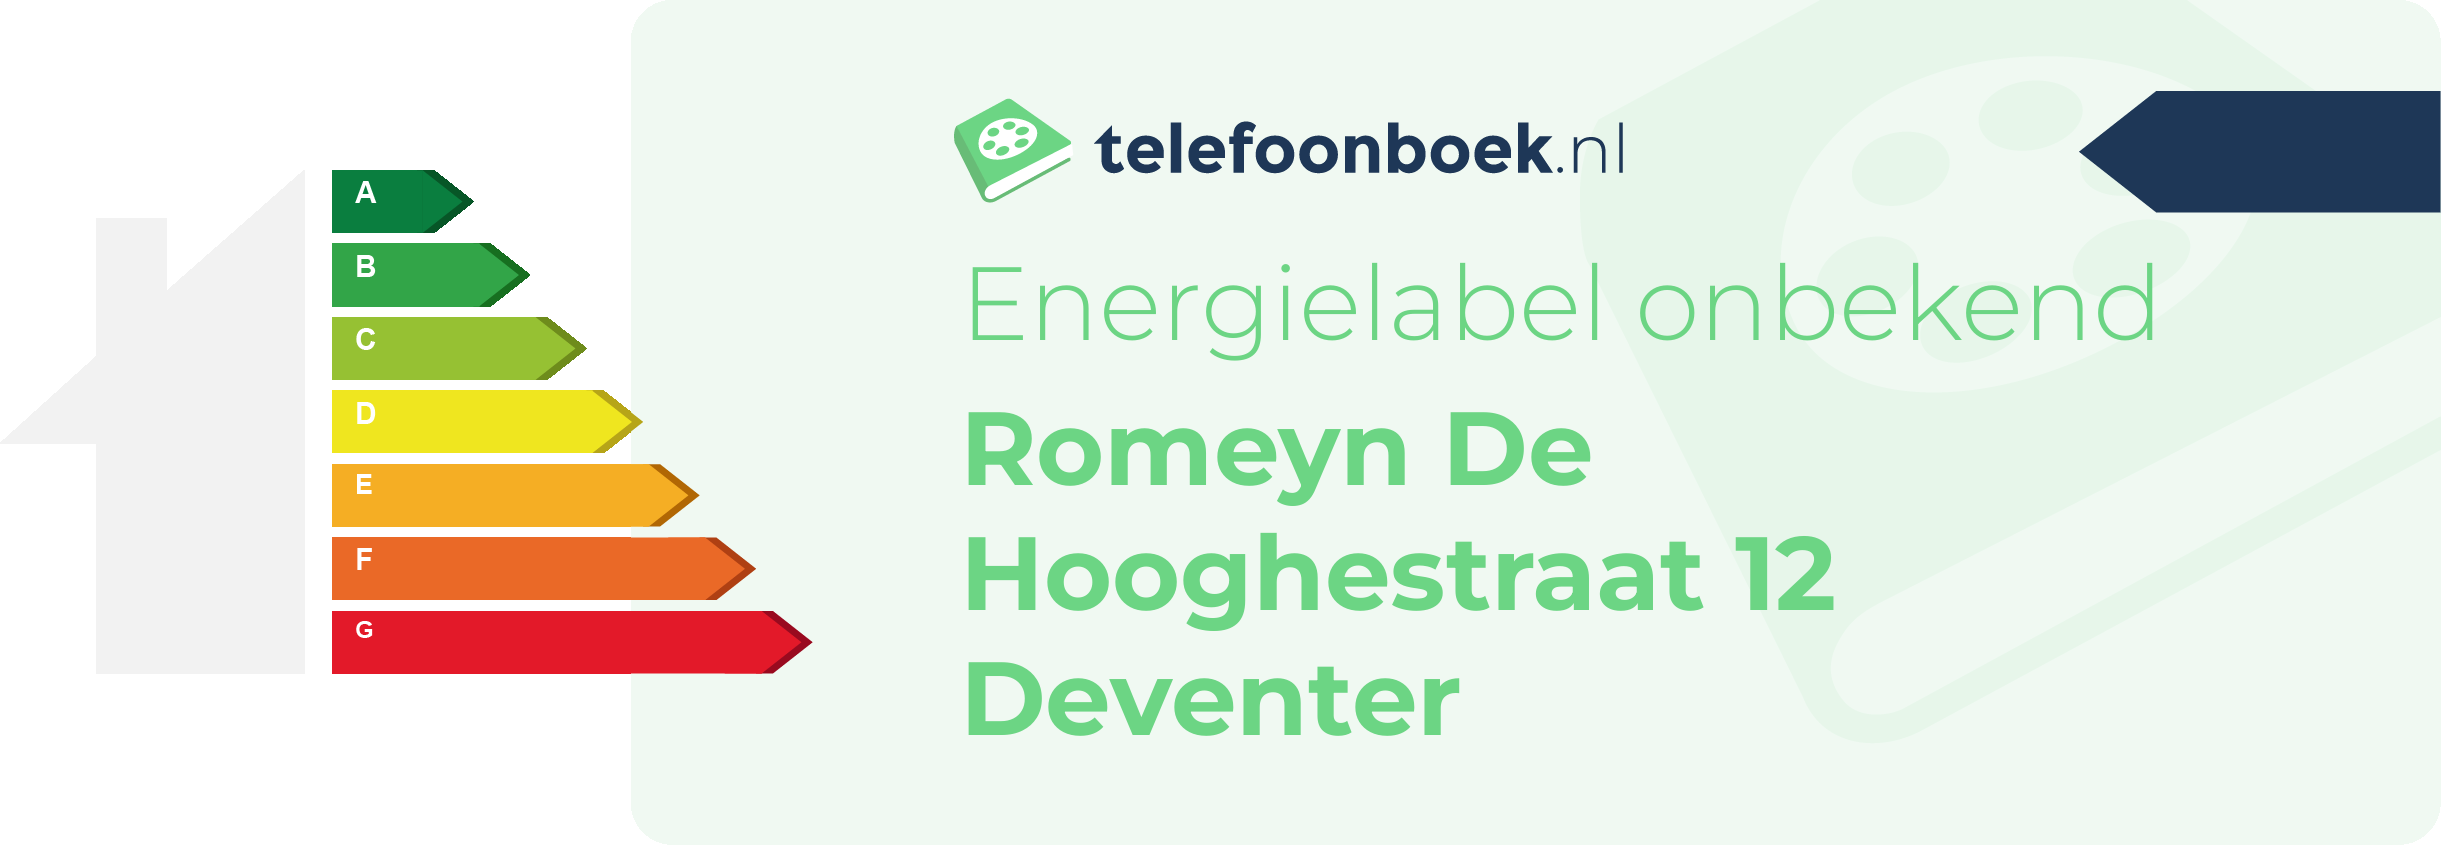 Energielabel Romeyn De Hooghestraat 12 Deventer